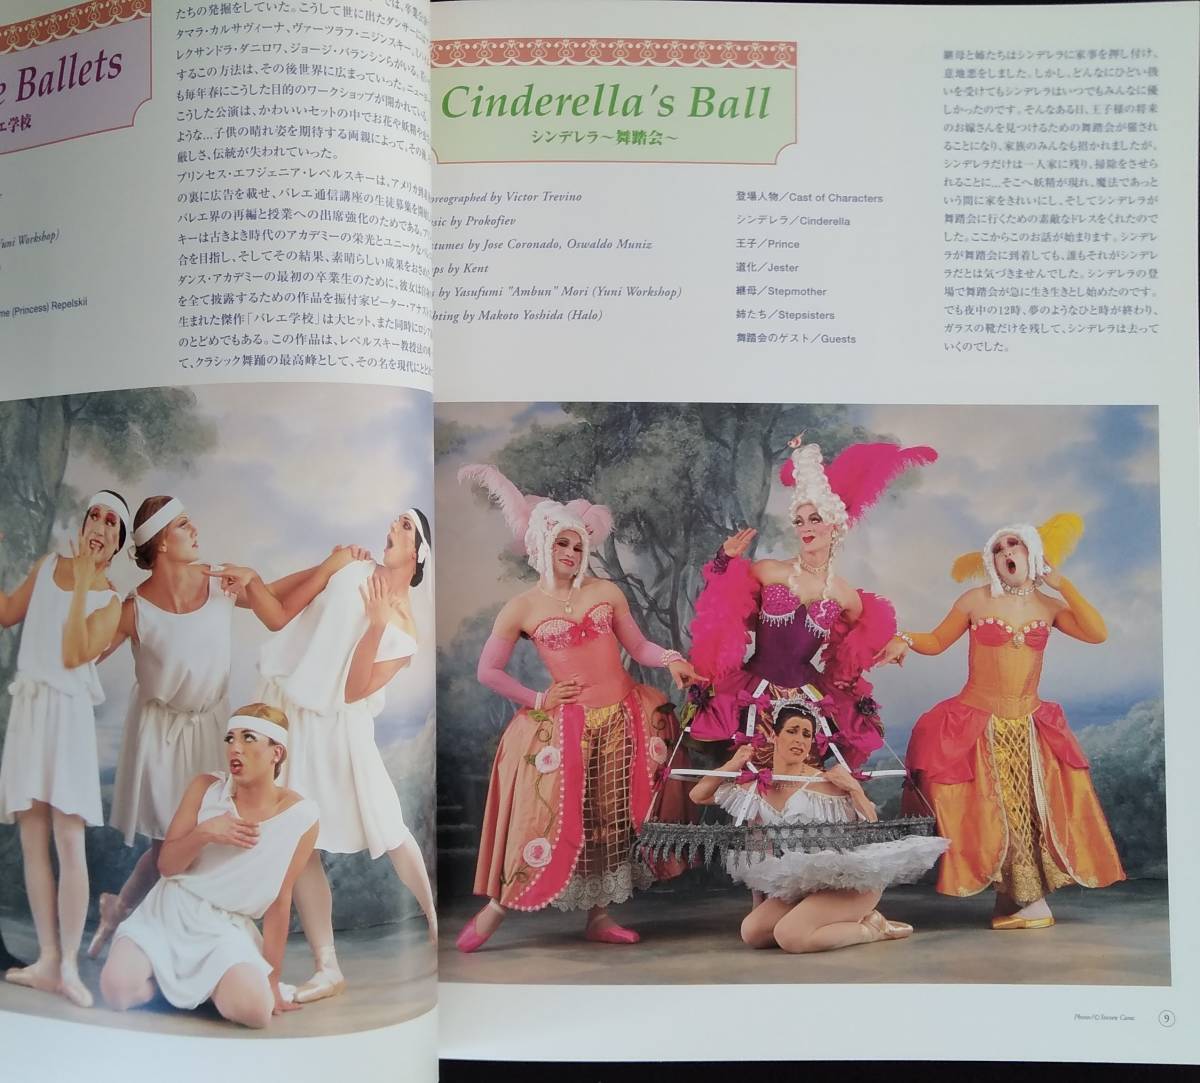 [*JN-192] проспект GRANDIVA балет .JAPAN Tour 2002 проспект [S:H]